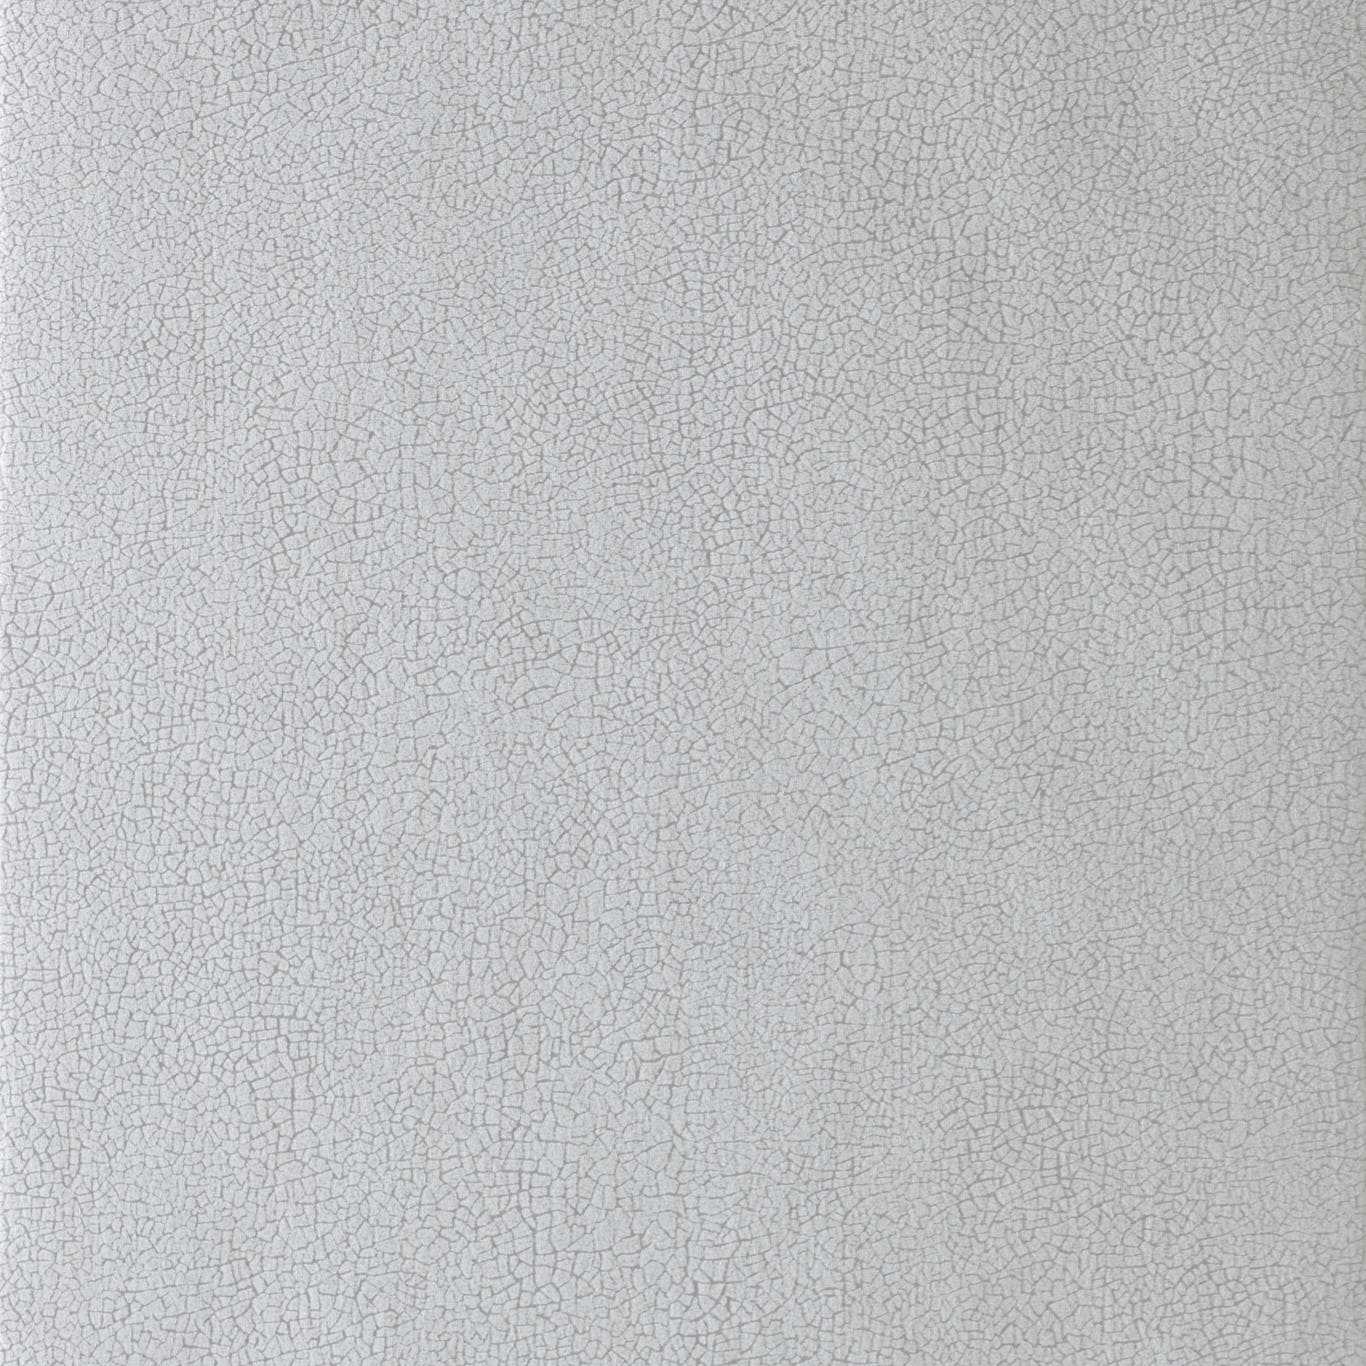 Igneous Quartz Wallpaper EANT111137 by Harlequin